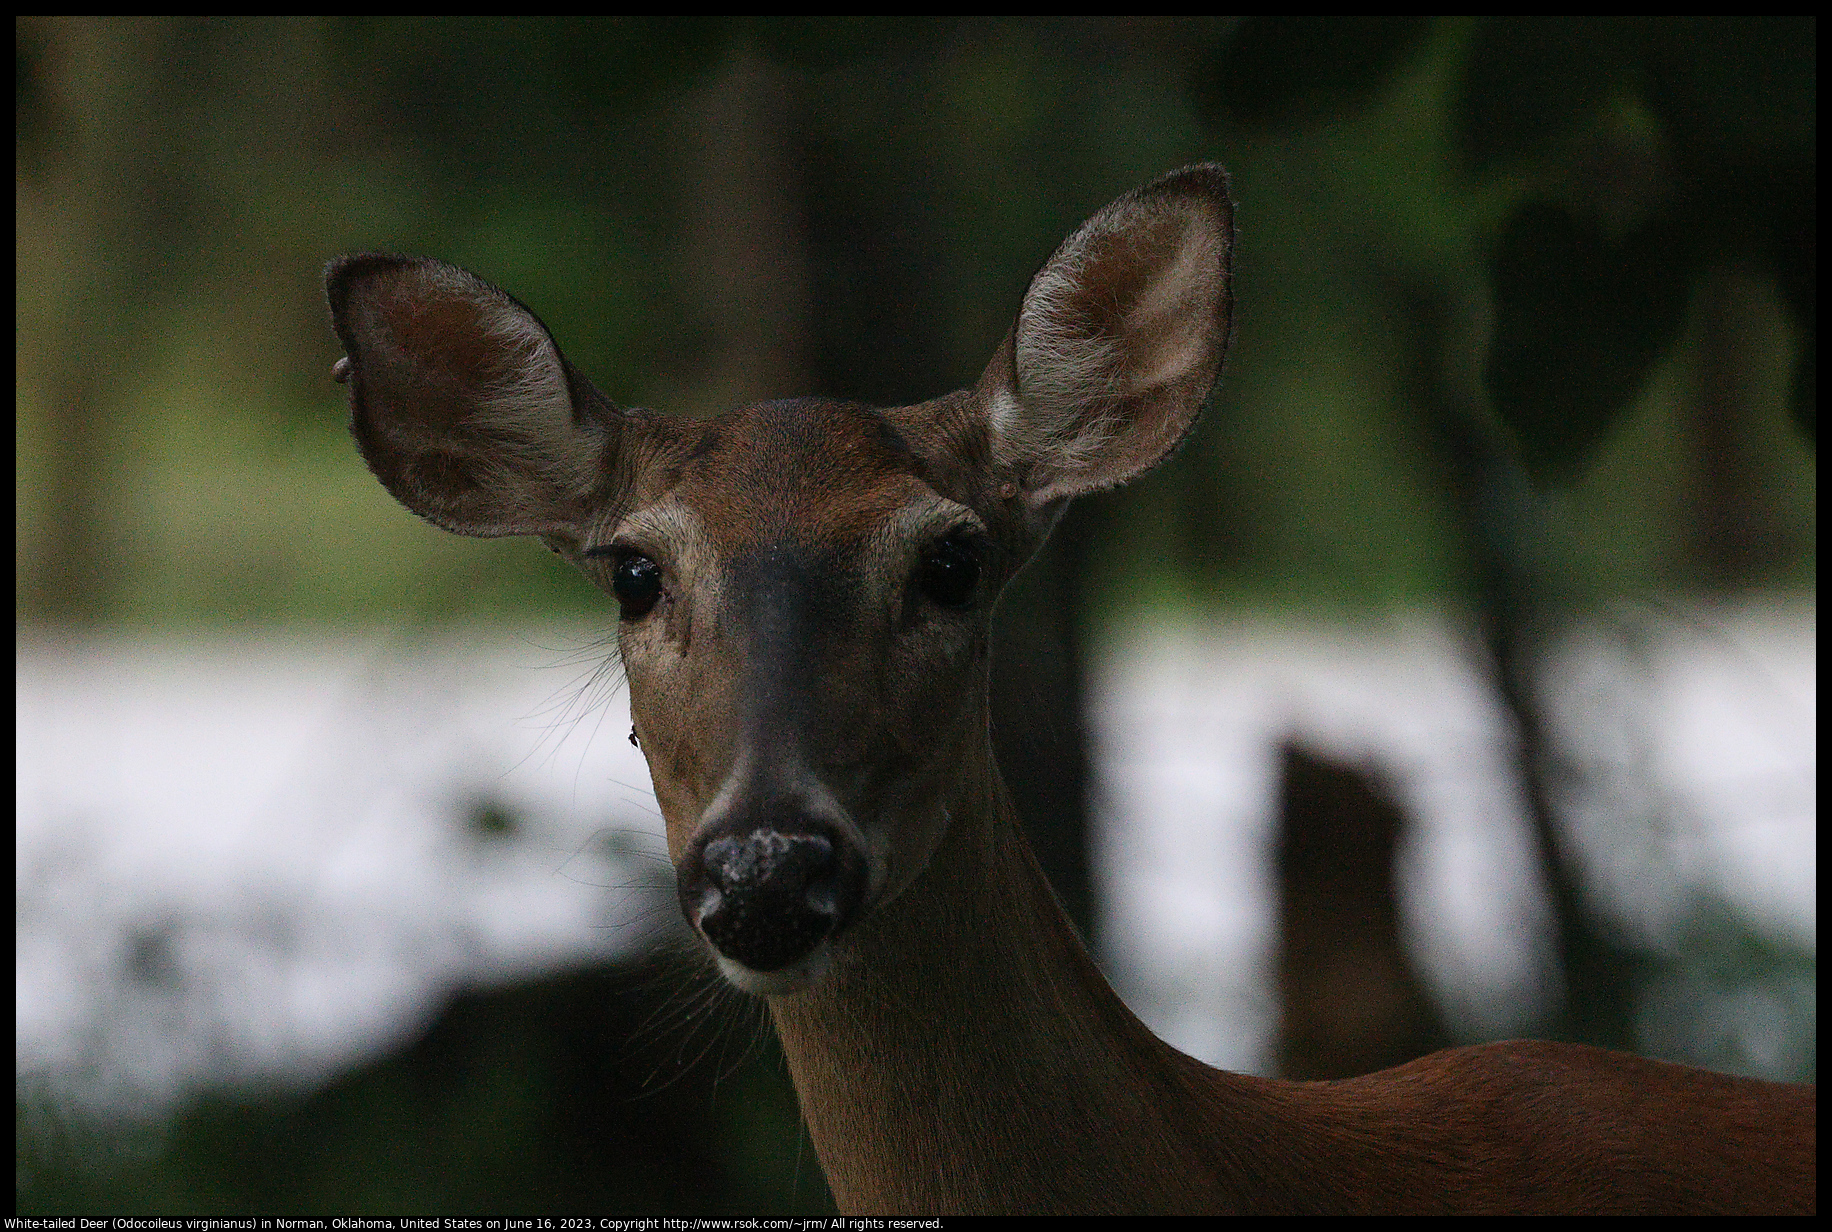 White-tailed Deer (Odocoileus virginianus) in Norman, Oklahoma, June 16, 2023